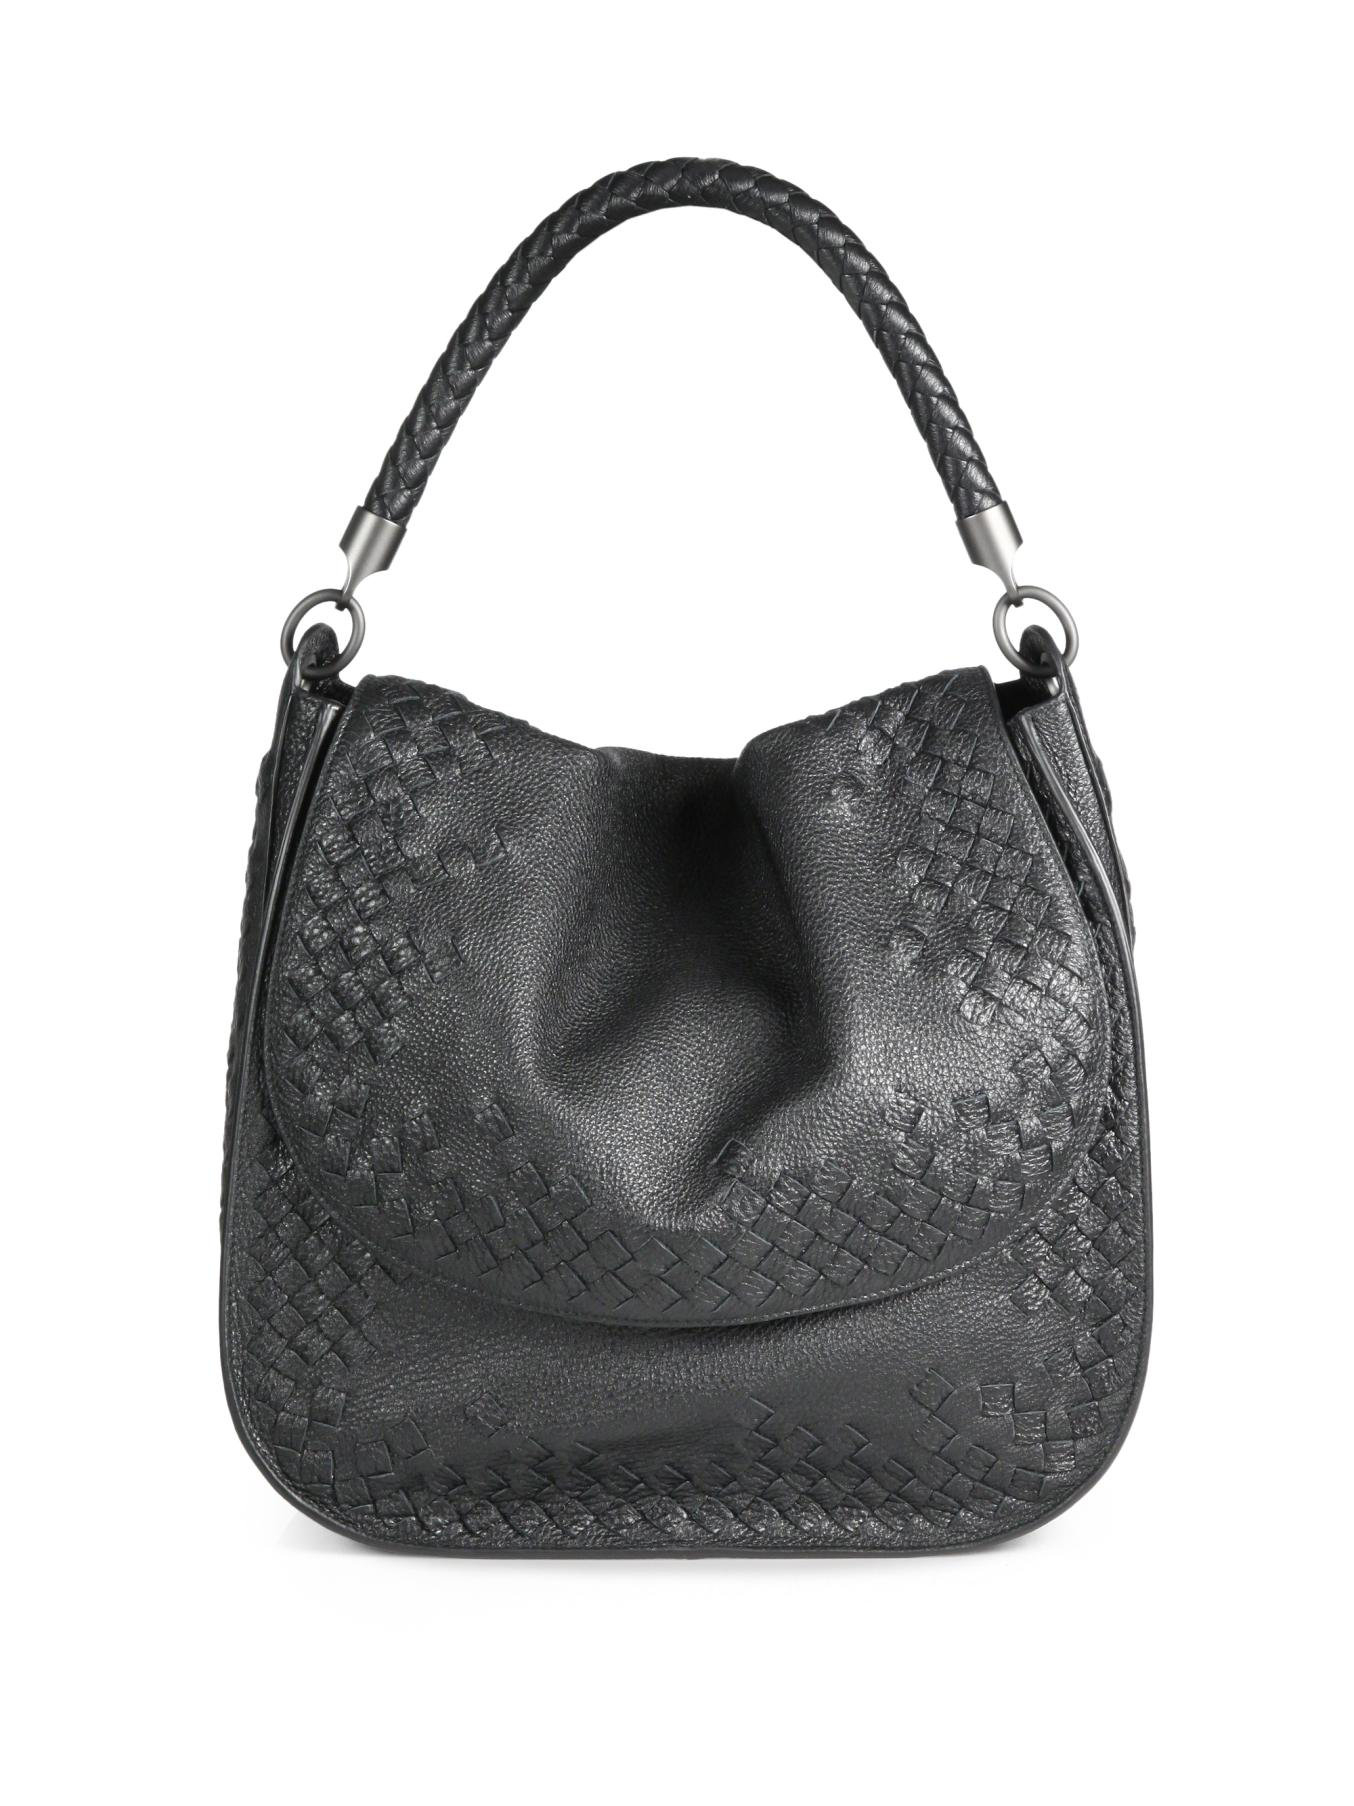 Bottega Veneta Medium Woven Leather Flap Top Shoulder Bag in Black - Lyst